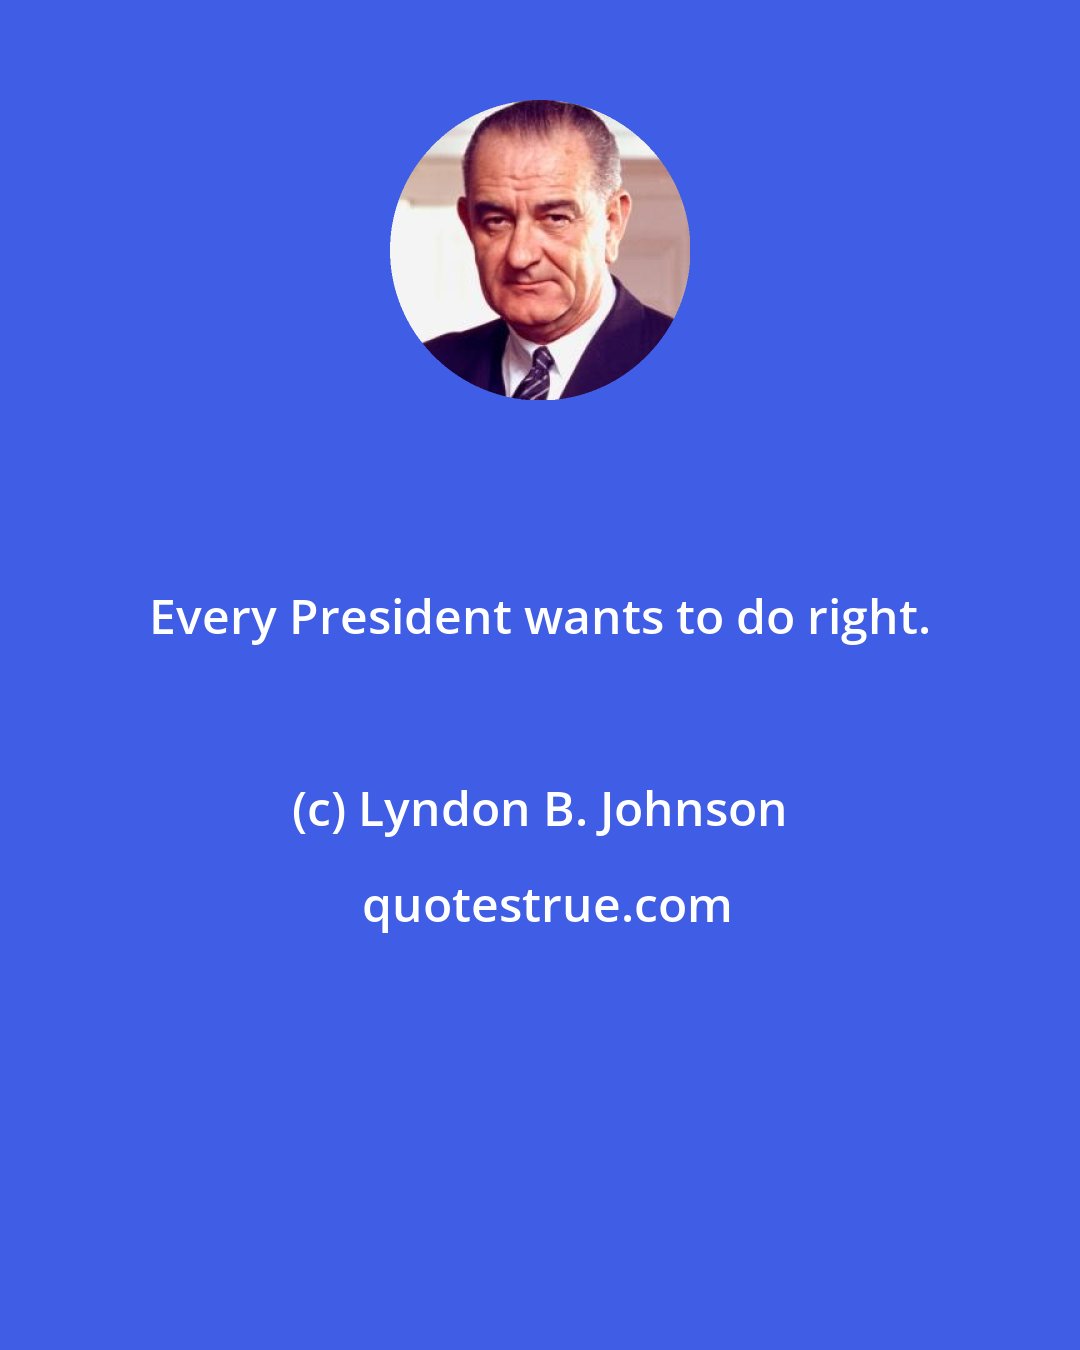 Lyndon B. Johnson: Every President wants to do right.